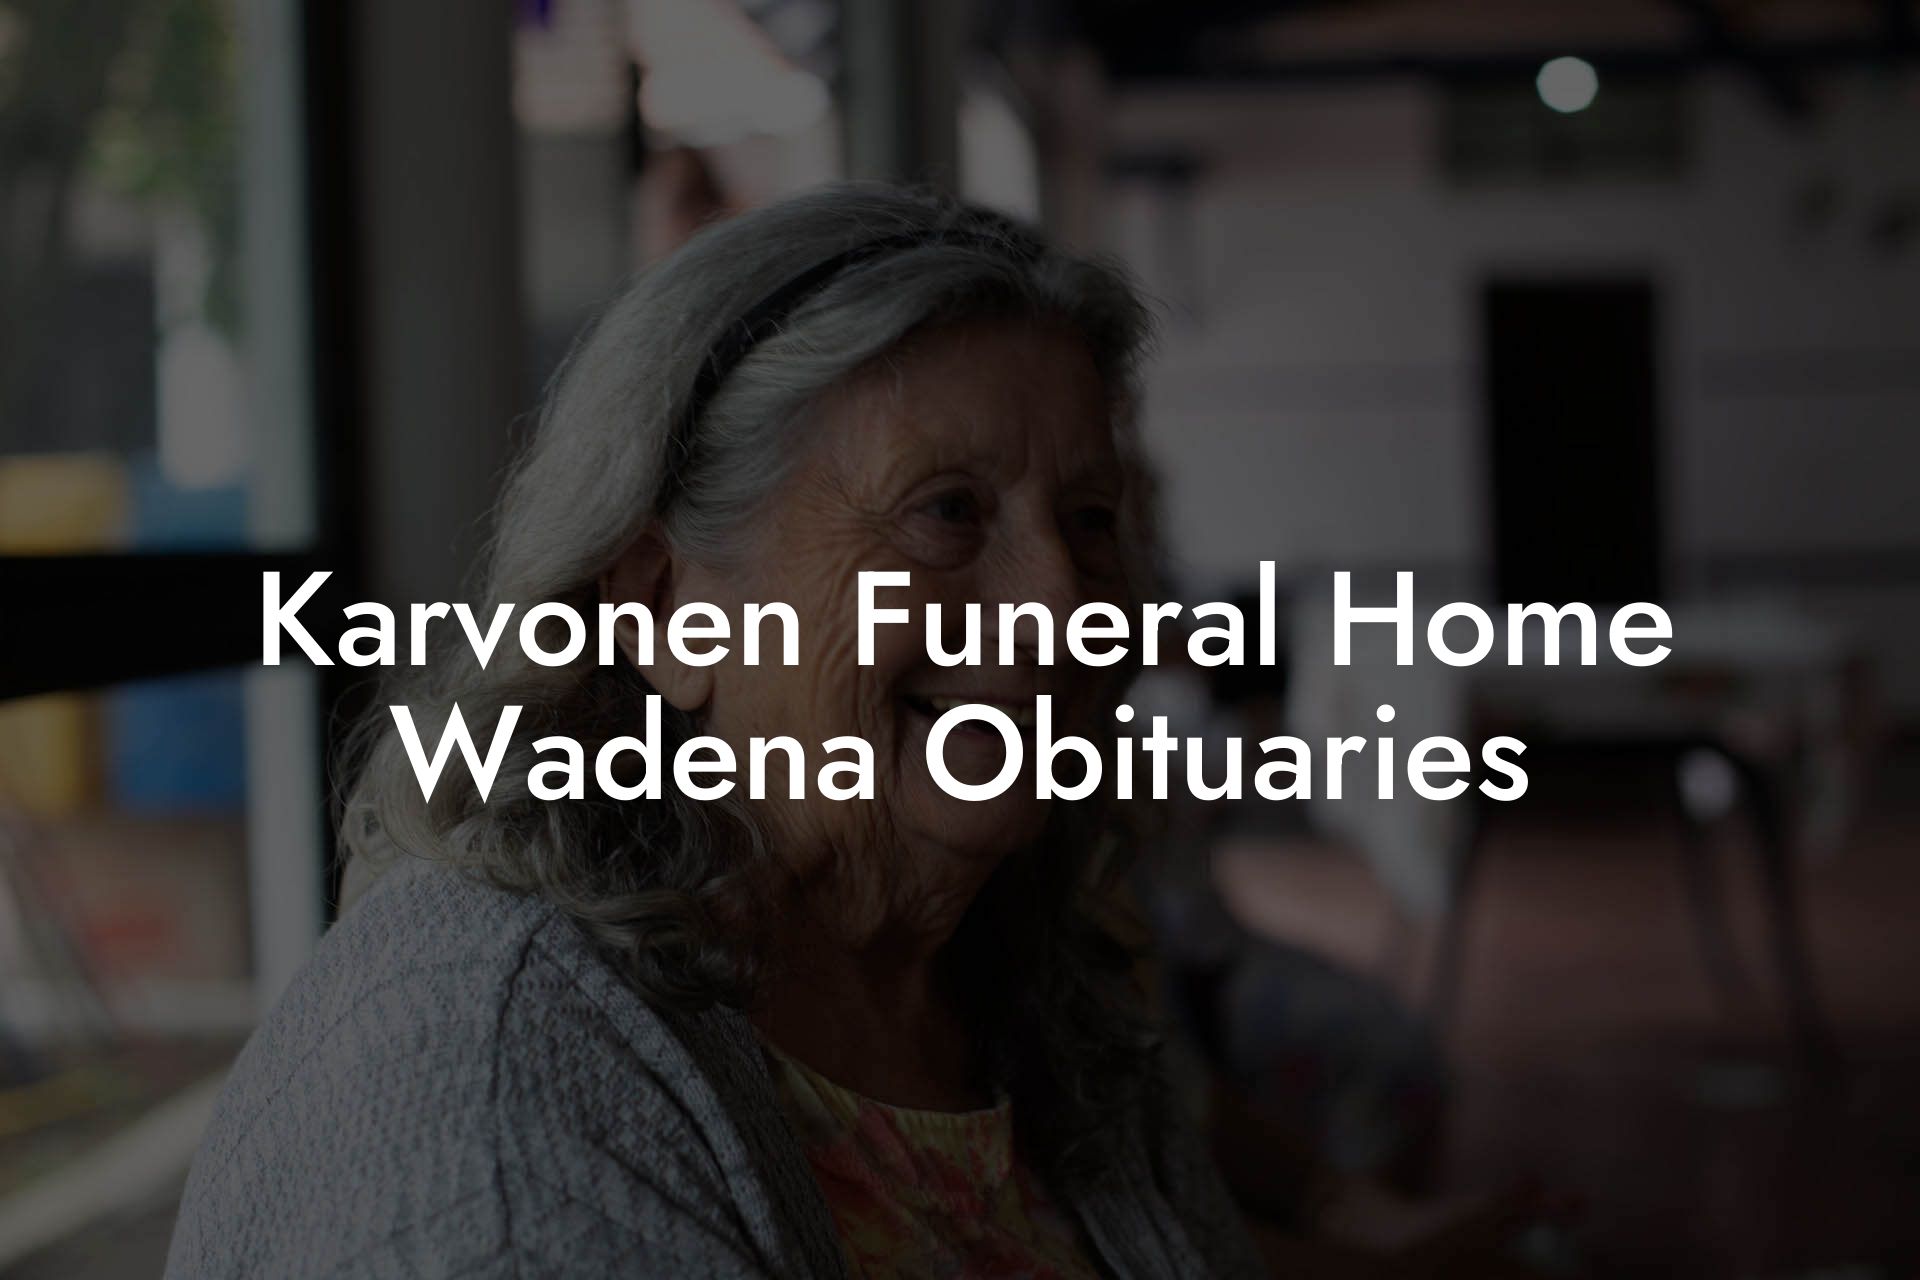 Karvonen Funeral Home - Wadena Obituaries